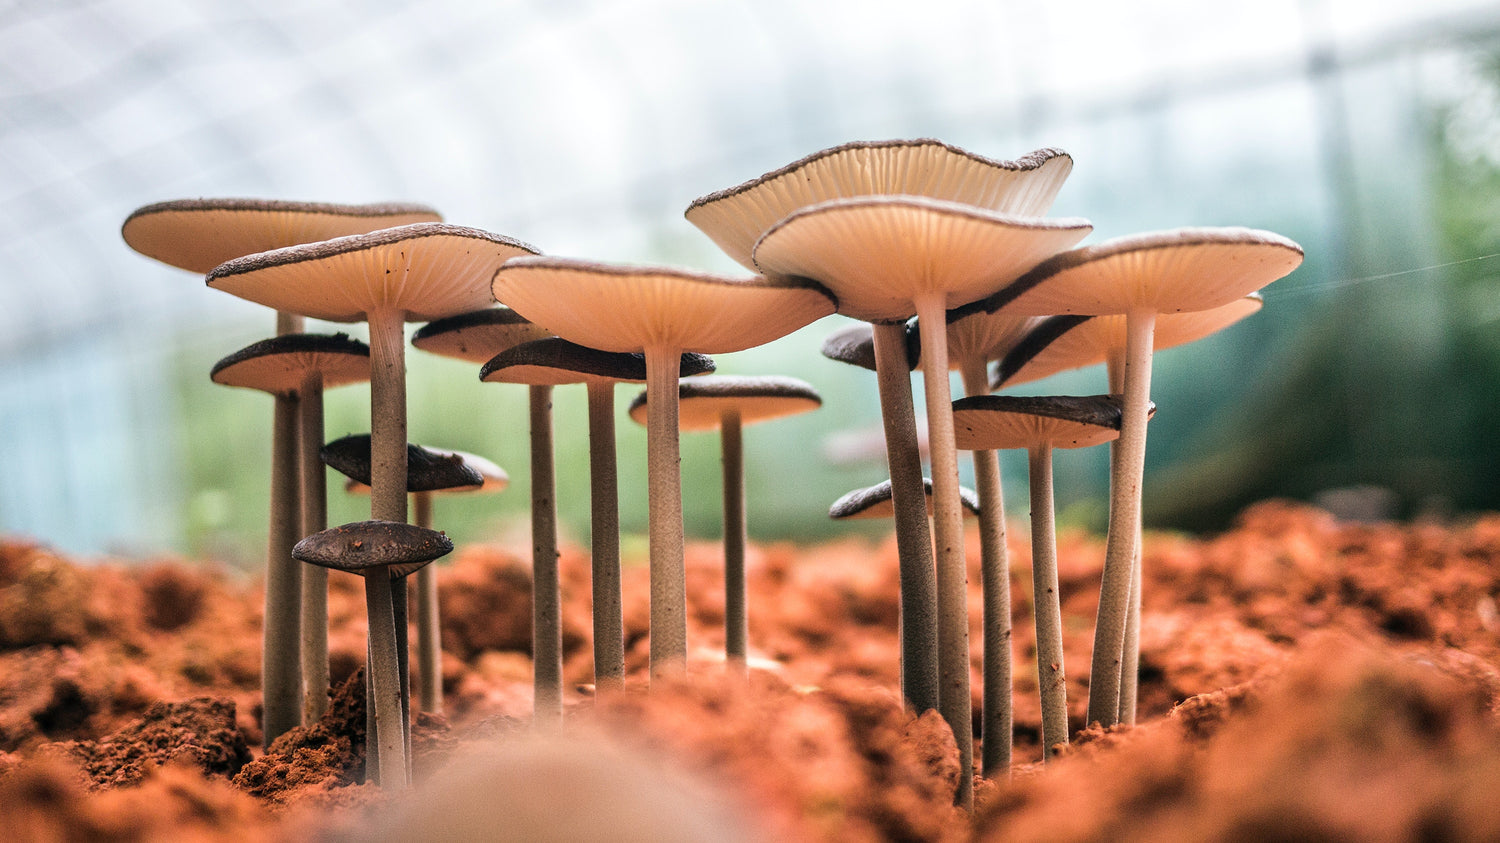 Adaptogenic mushrooms